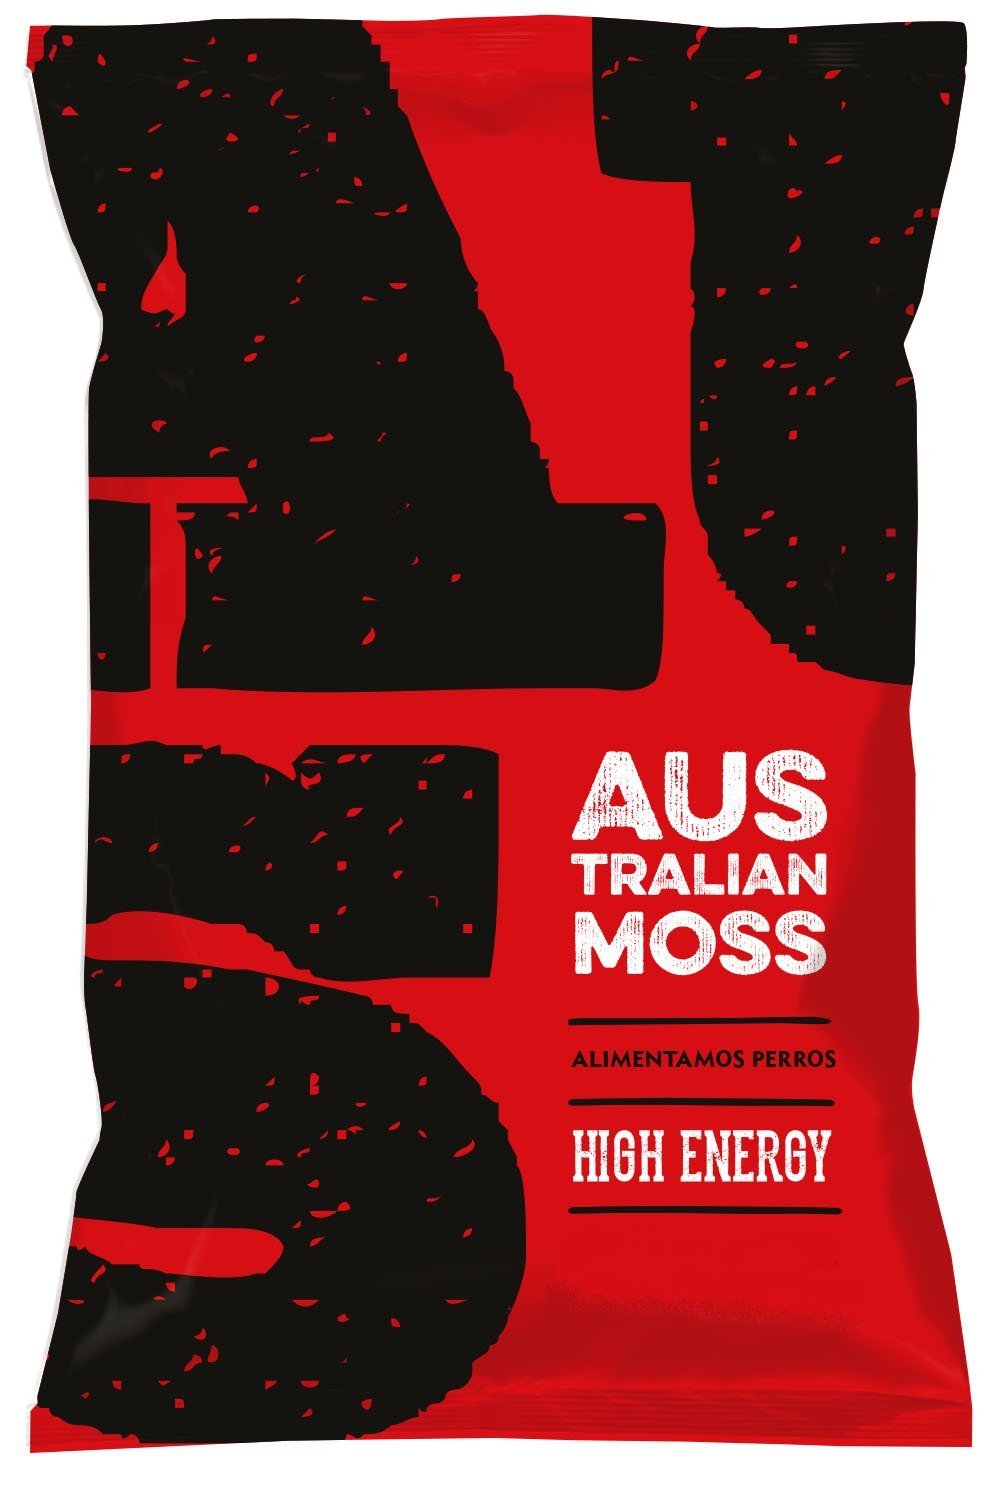 Australian Moss High Energy